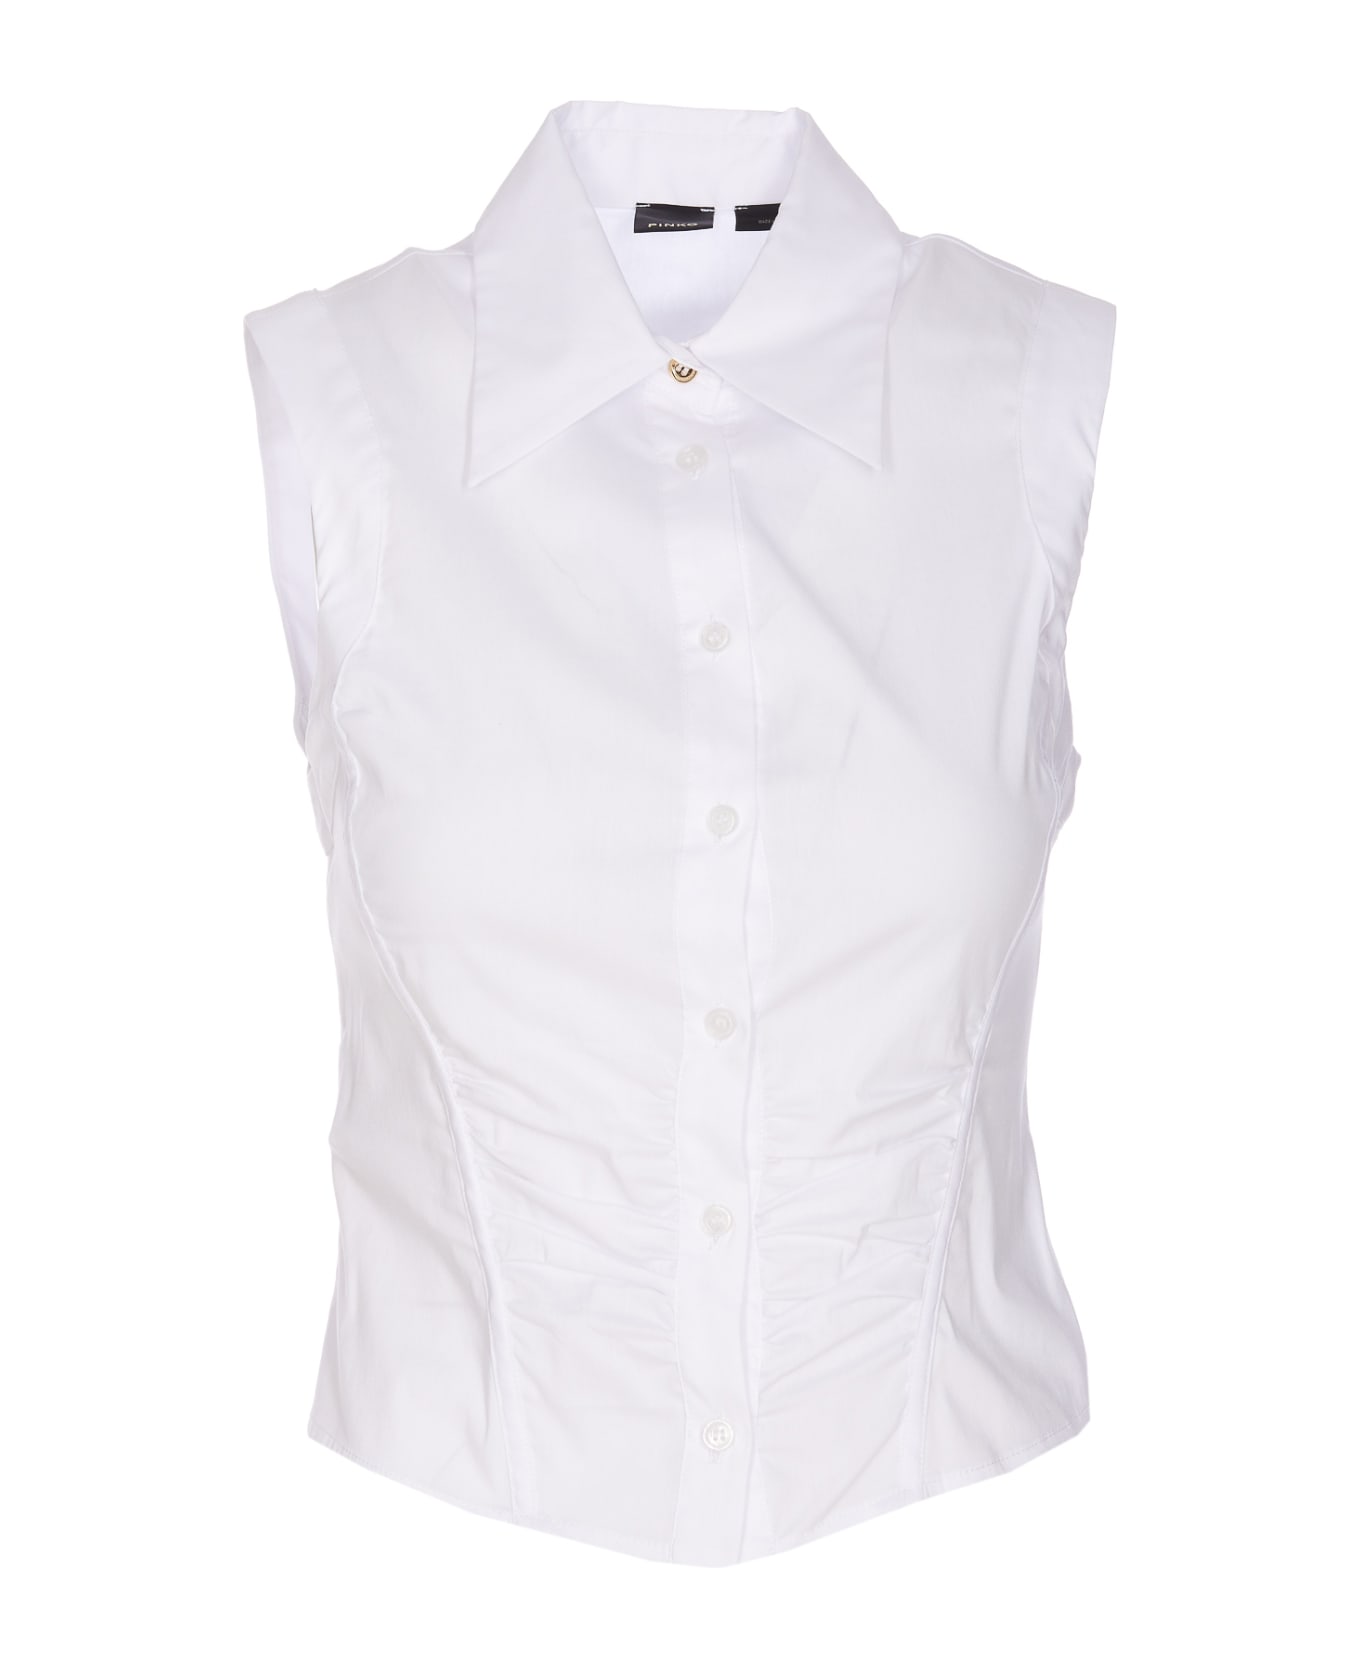 Pinko Clio Shirt - White シャツ